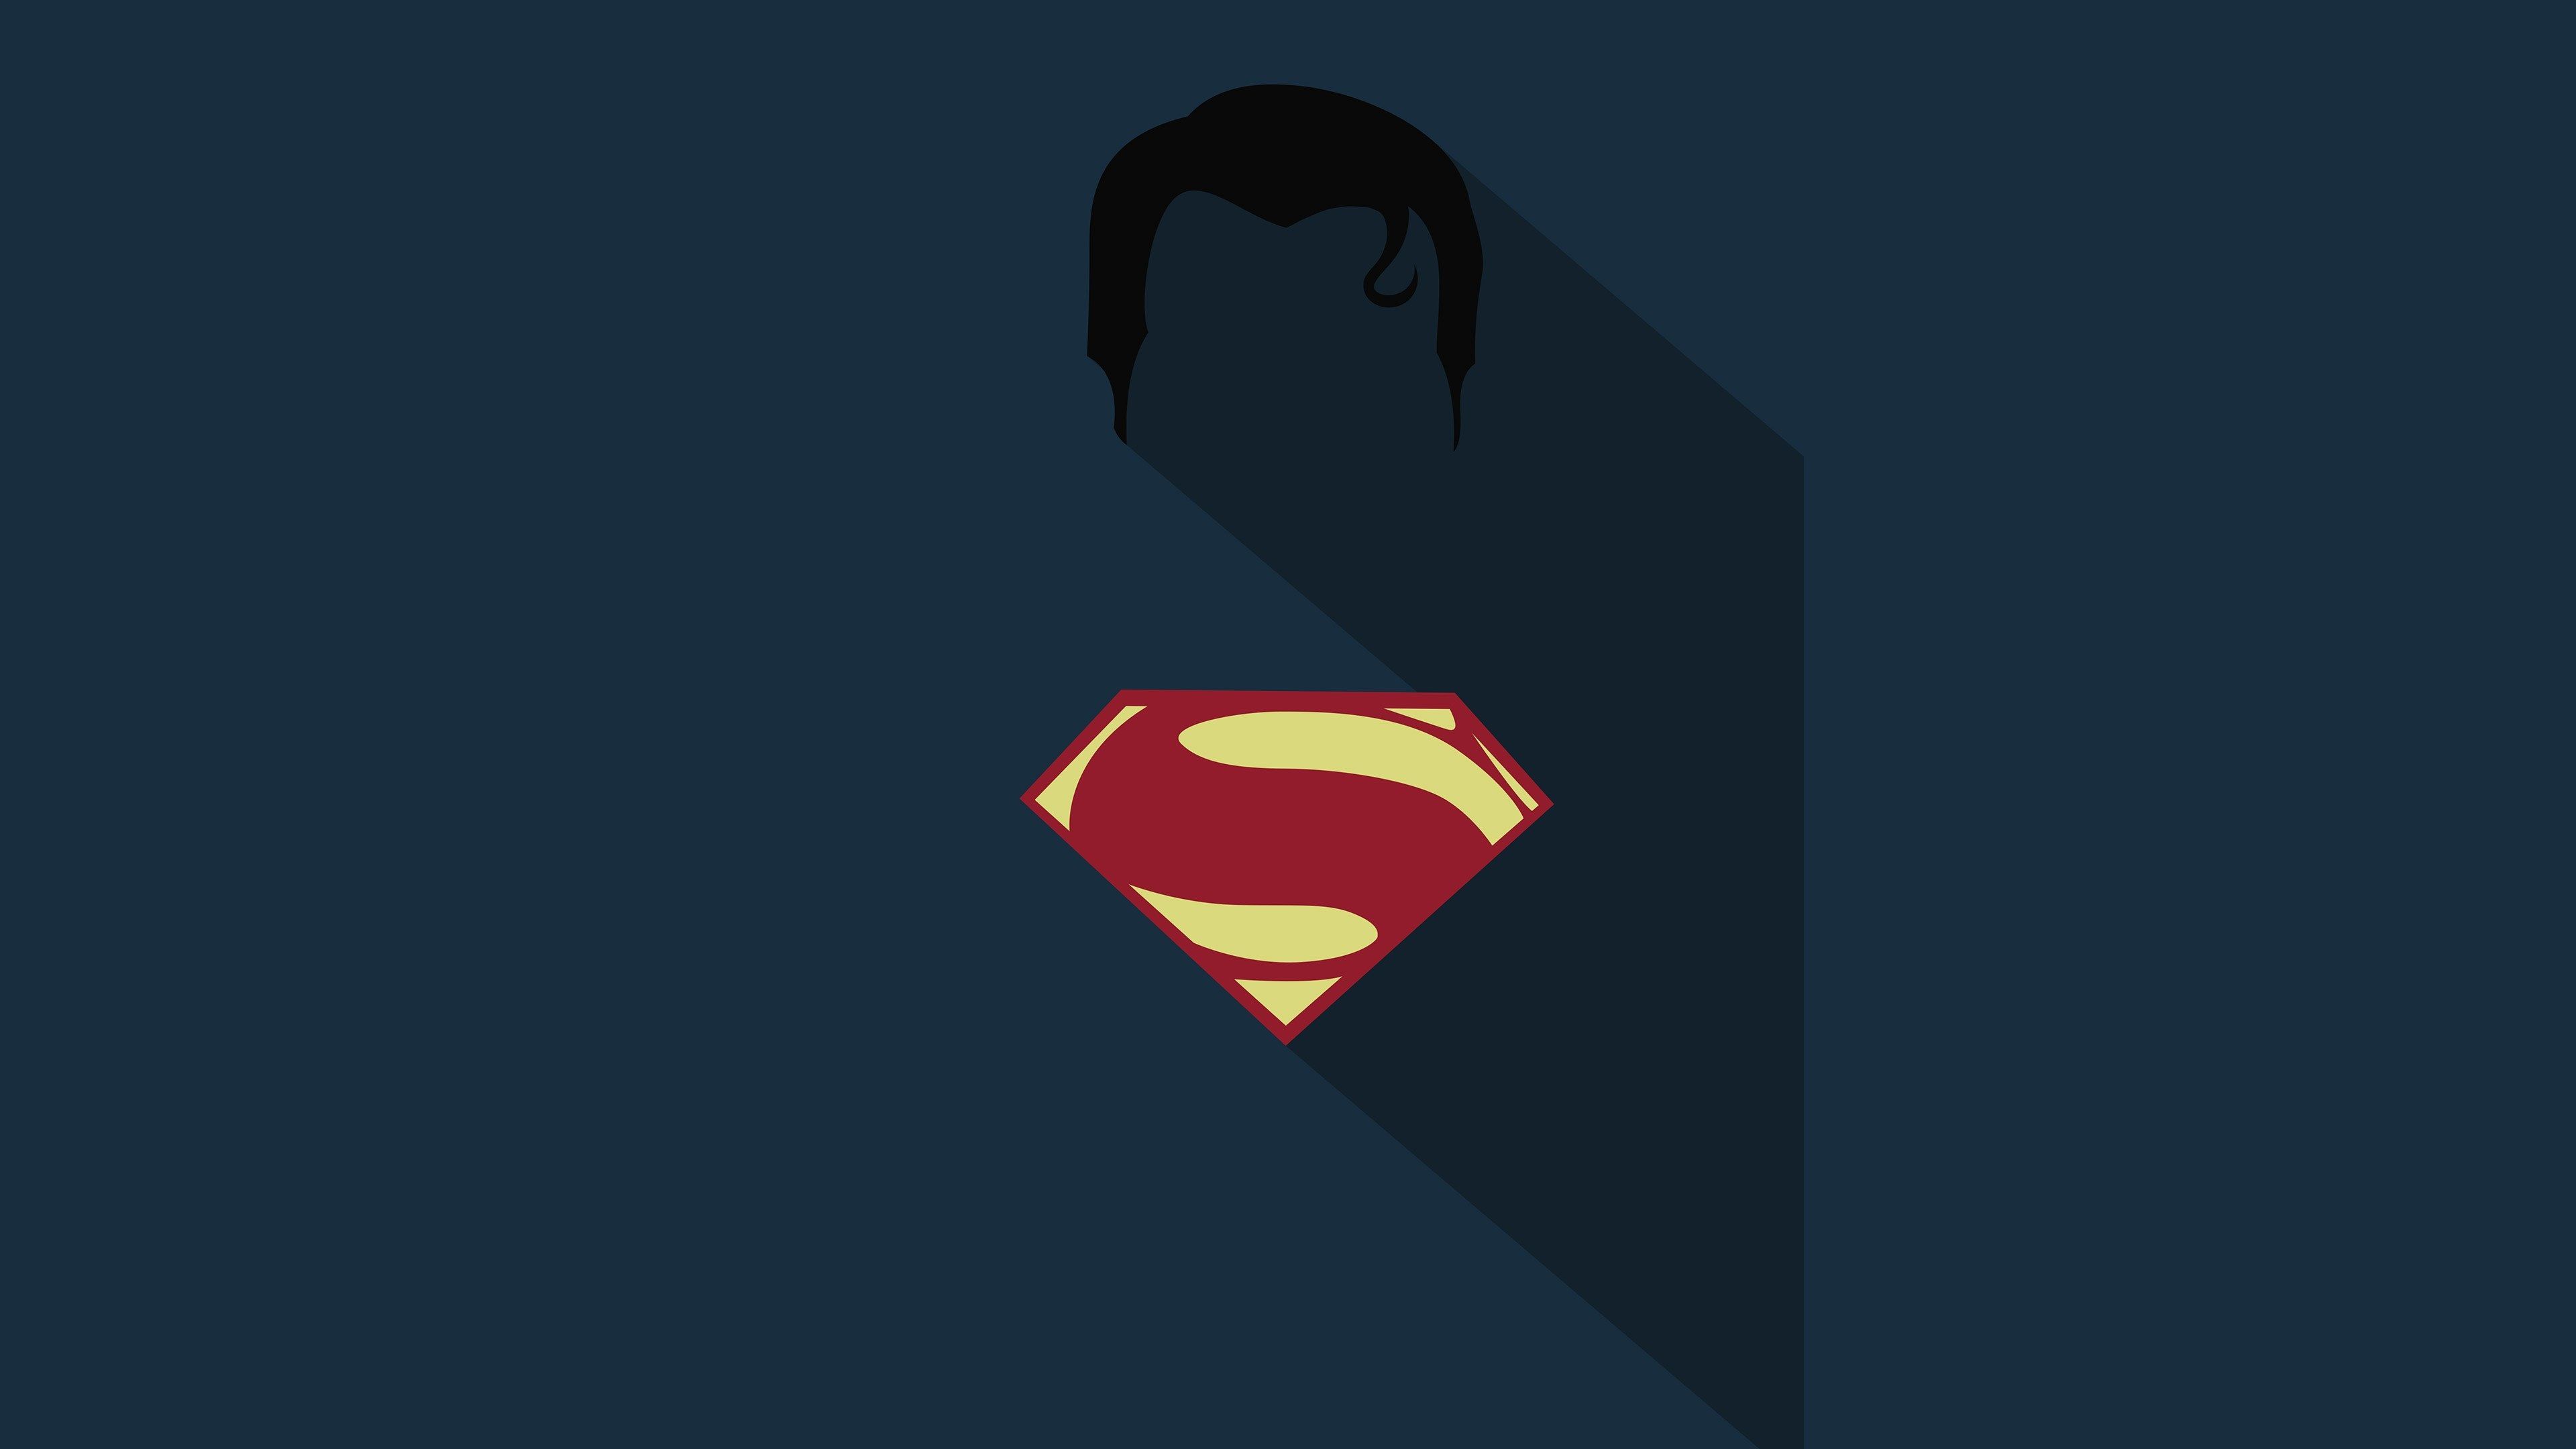 superman 4k beautiful background. Superman wallpaper, Superhero wallpaper, Beautiful background